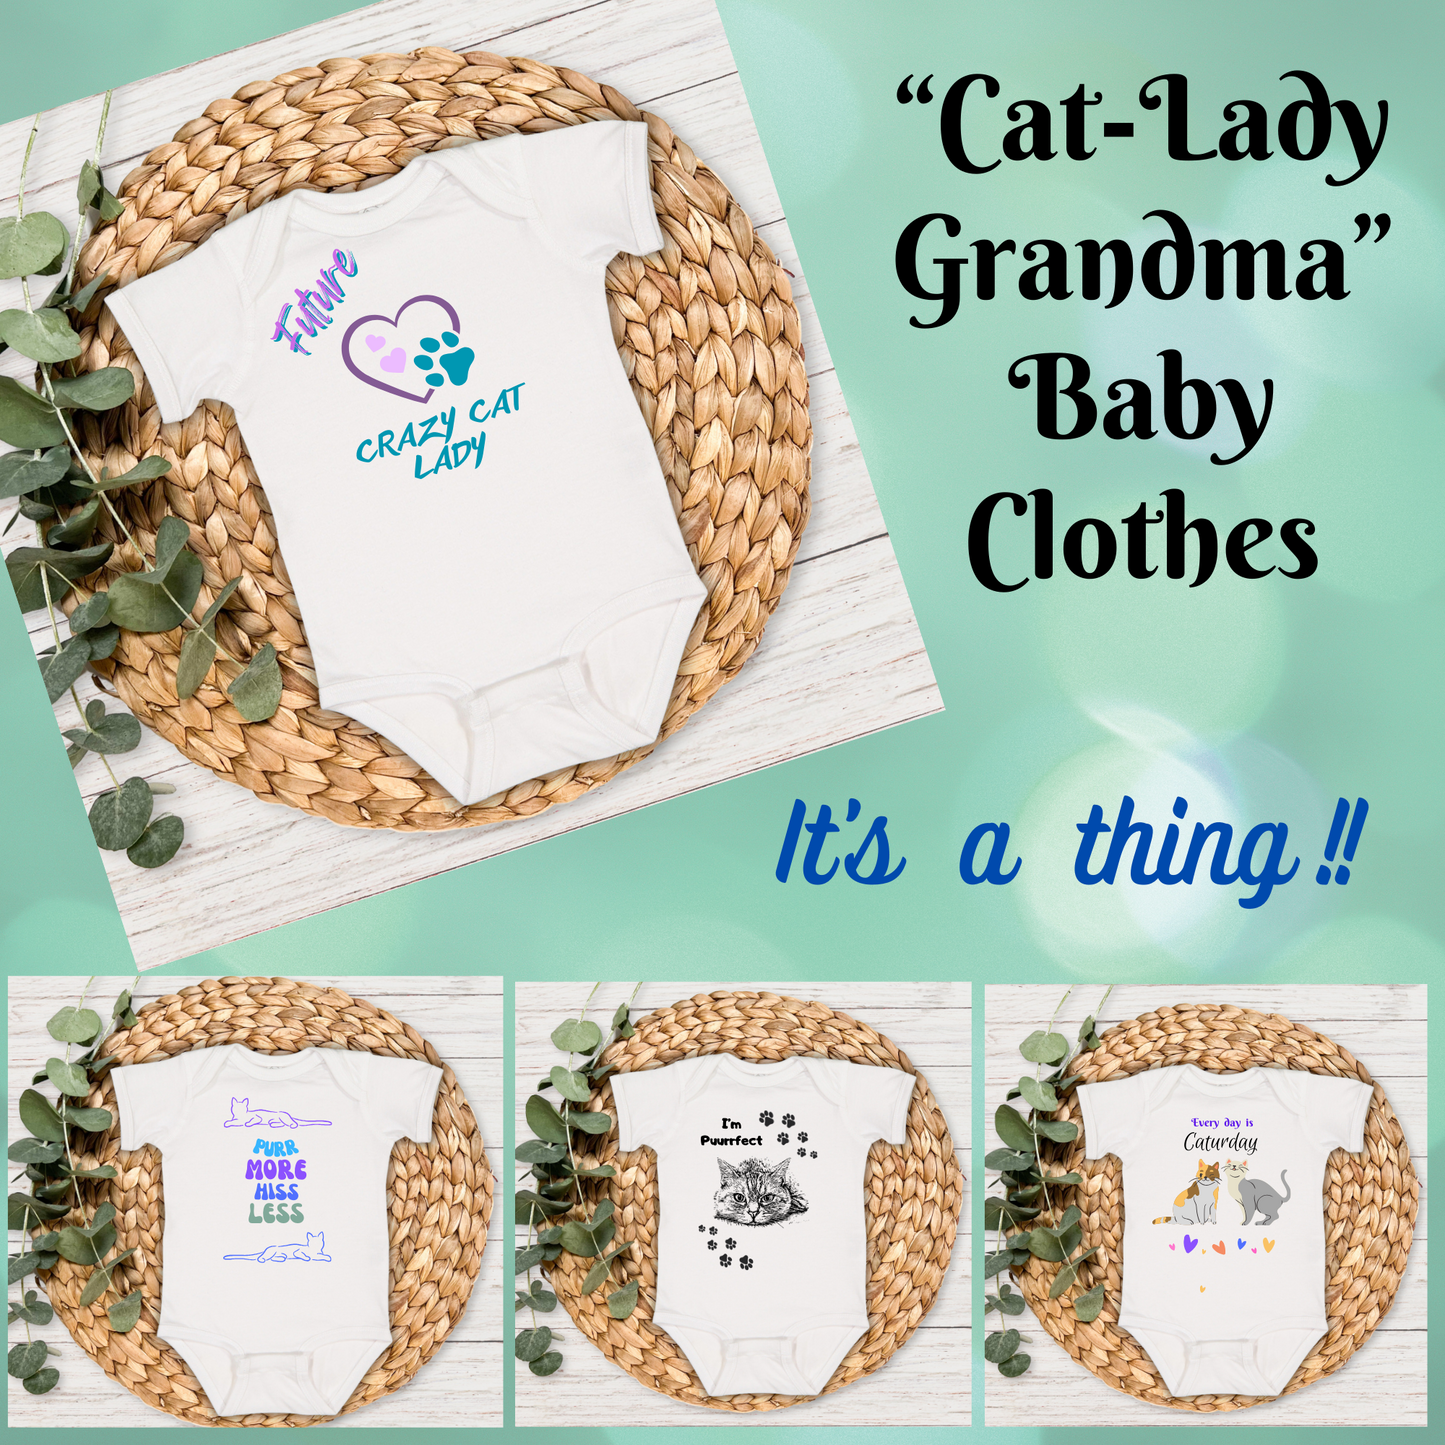 "Cat-Lady Grandma" Baby Bodysuit, "Purr More Hiss Less" Design, Cat Lover Mom Grandma Gift, 4 Colors